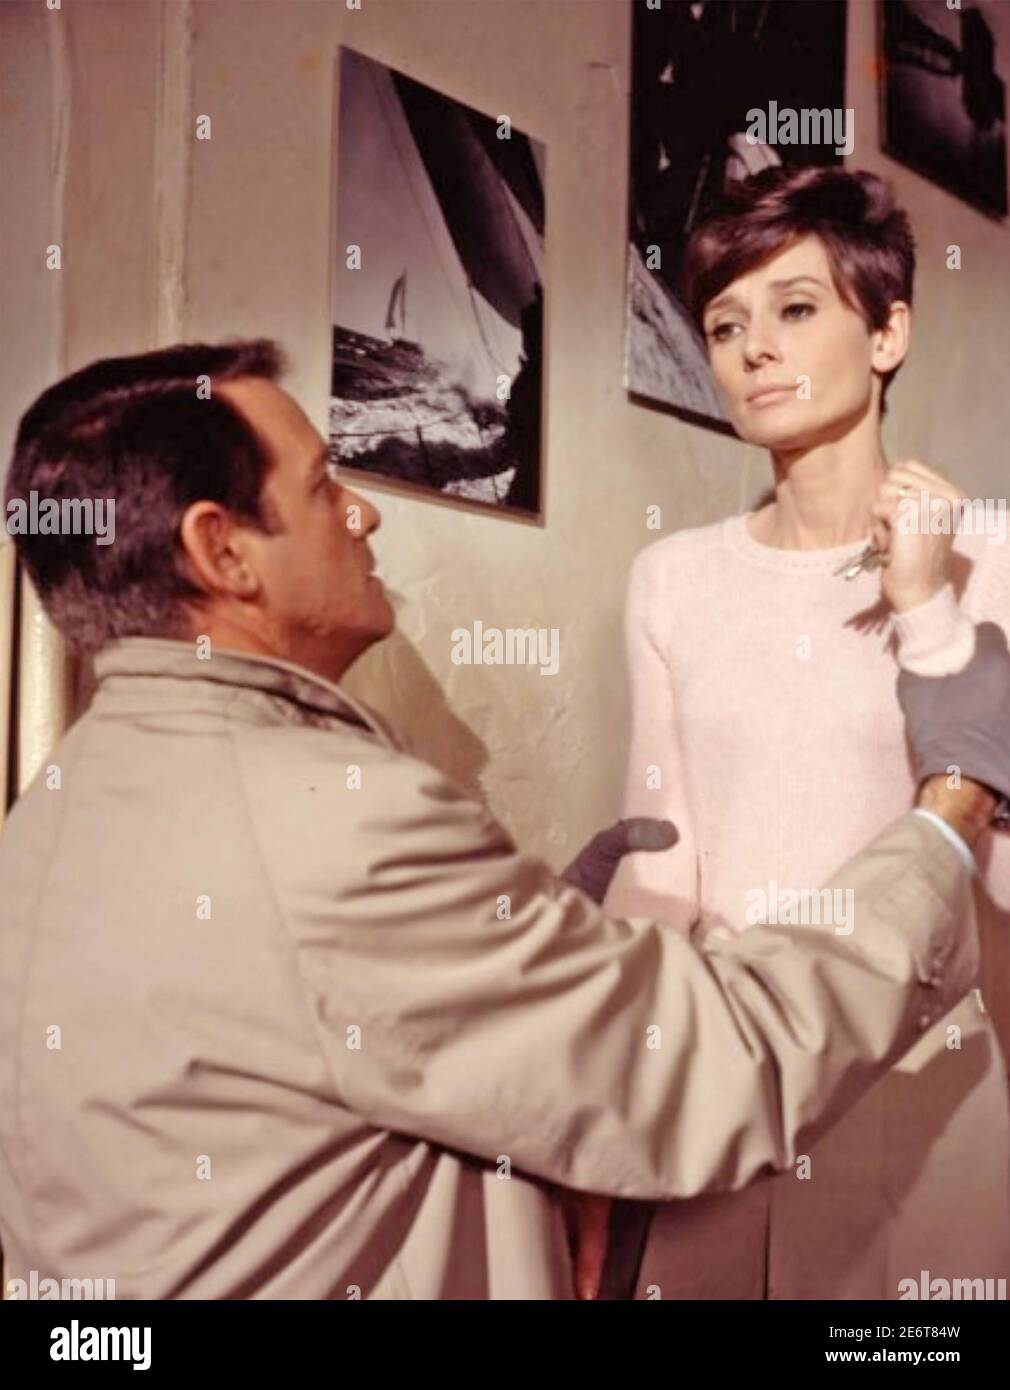 ATTENDEZ JUSQU'À LA NUIT 1967 Warner Bros./Seven Arts film avec Audrey Hepburn et Richard Crenna Banque D'Images